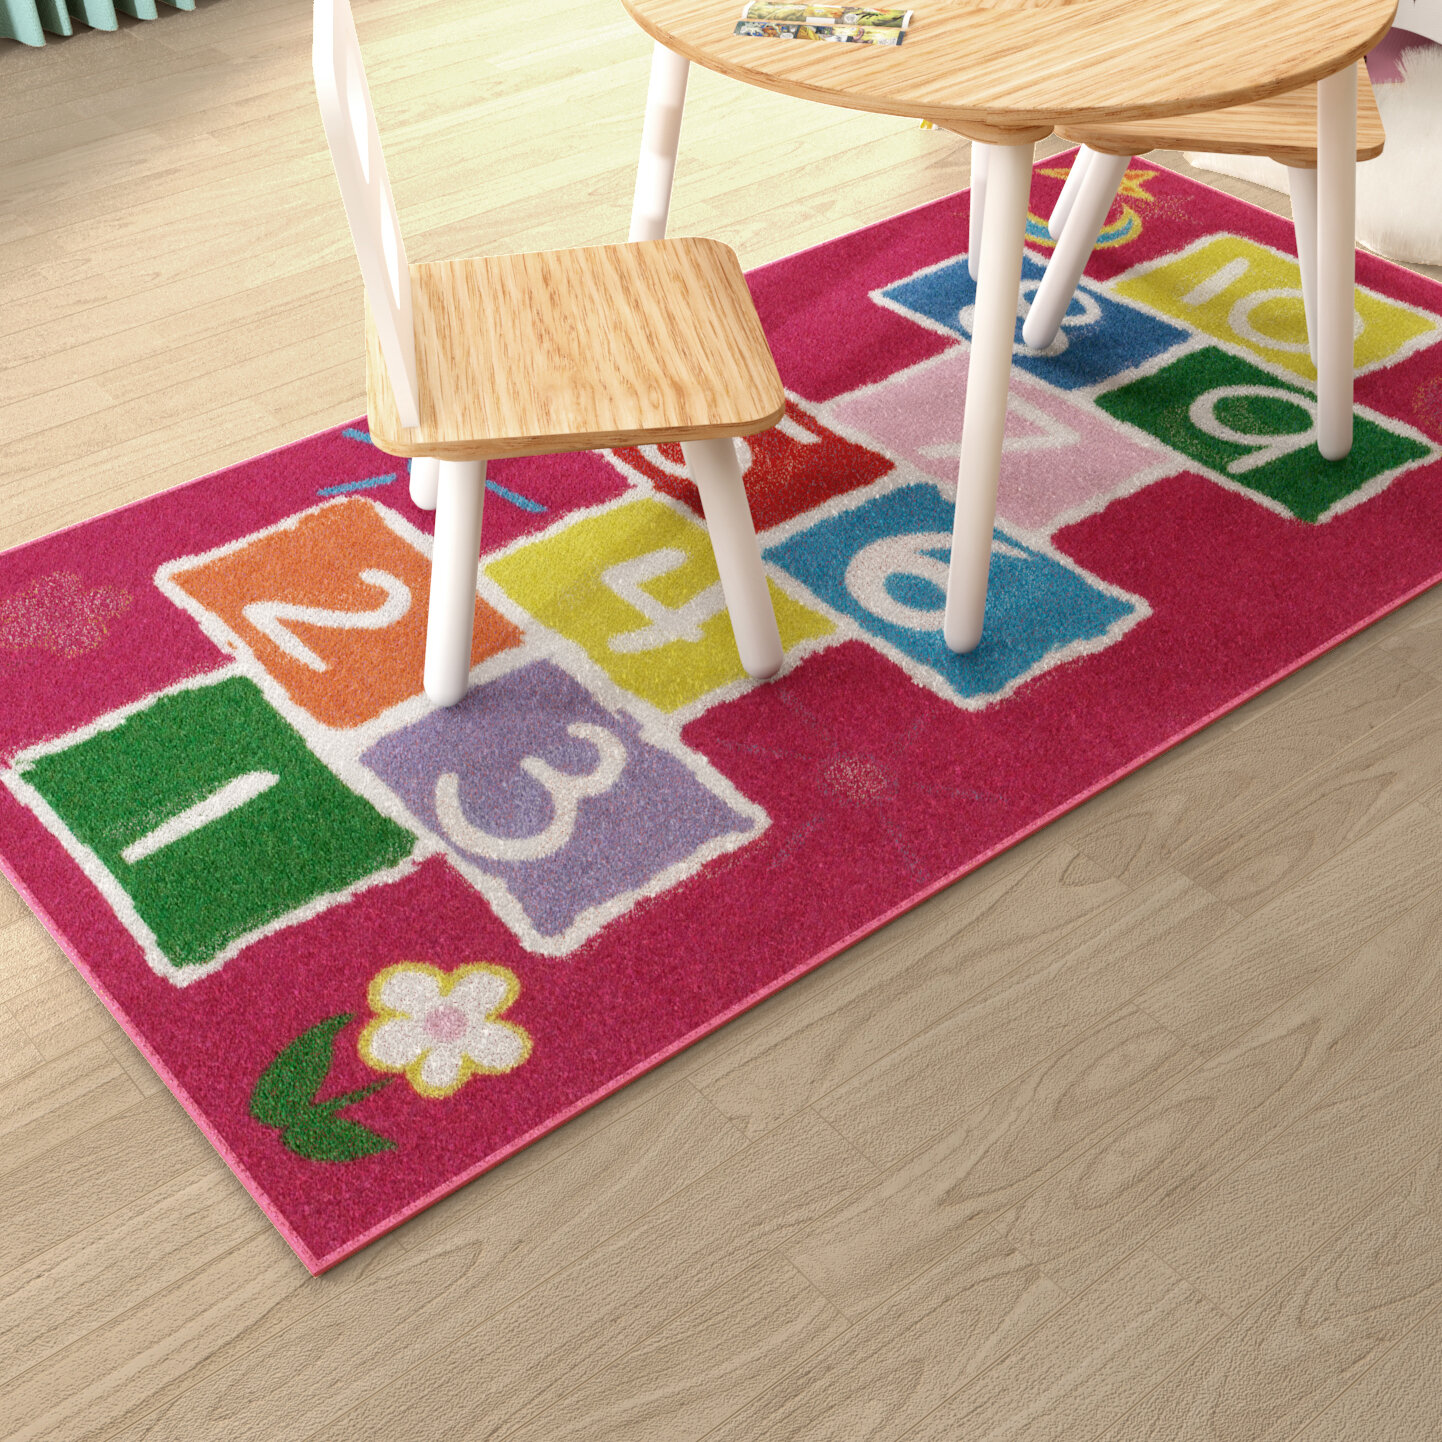 Sass /& Belle Puppy Dog Playtime Rug Kids Bedroom Nursery Home Decor Carpet